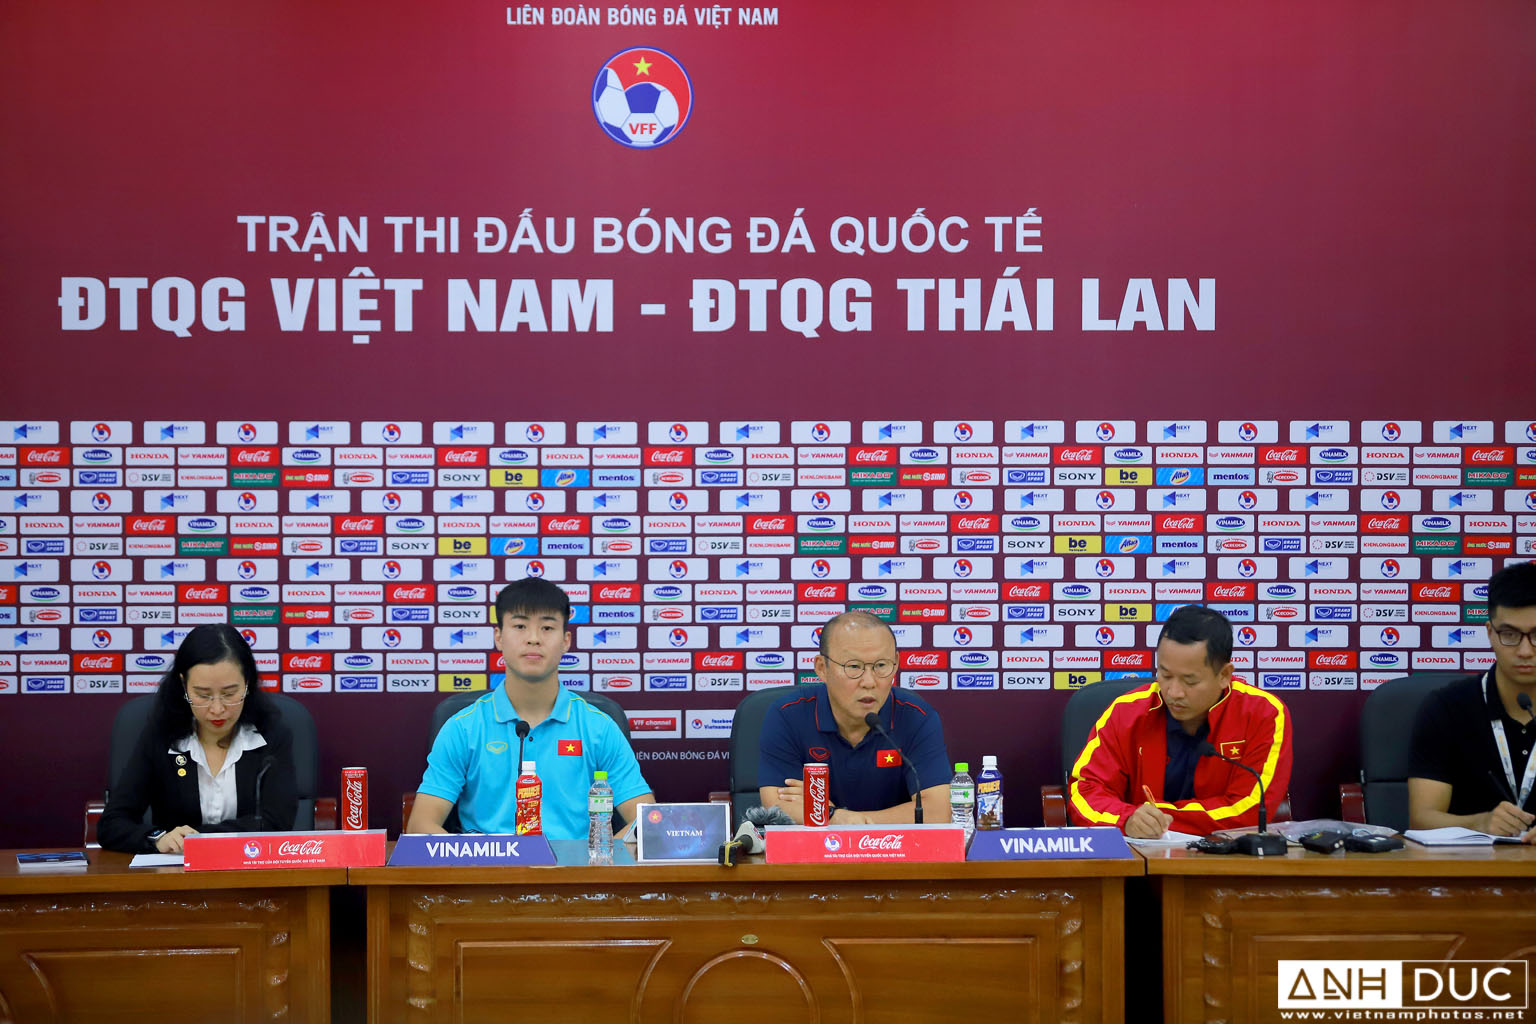 Truong Anh Duc Press Photographer - Vietnam Photos